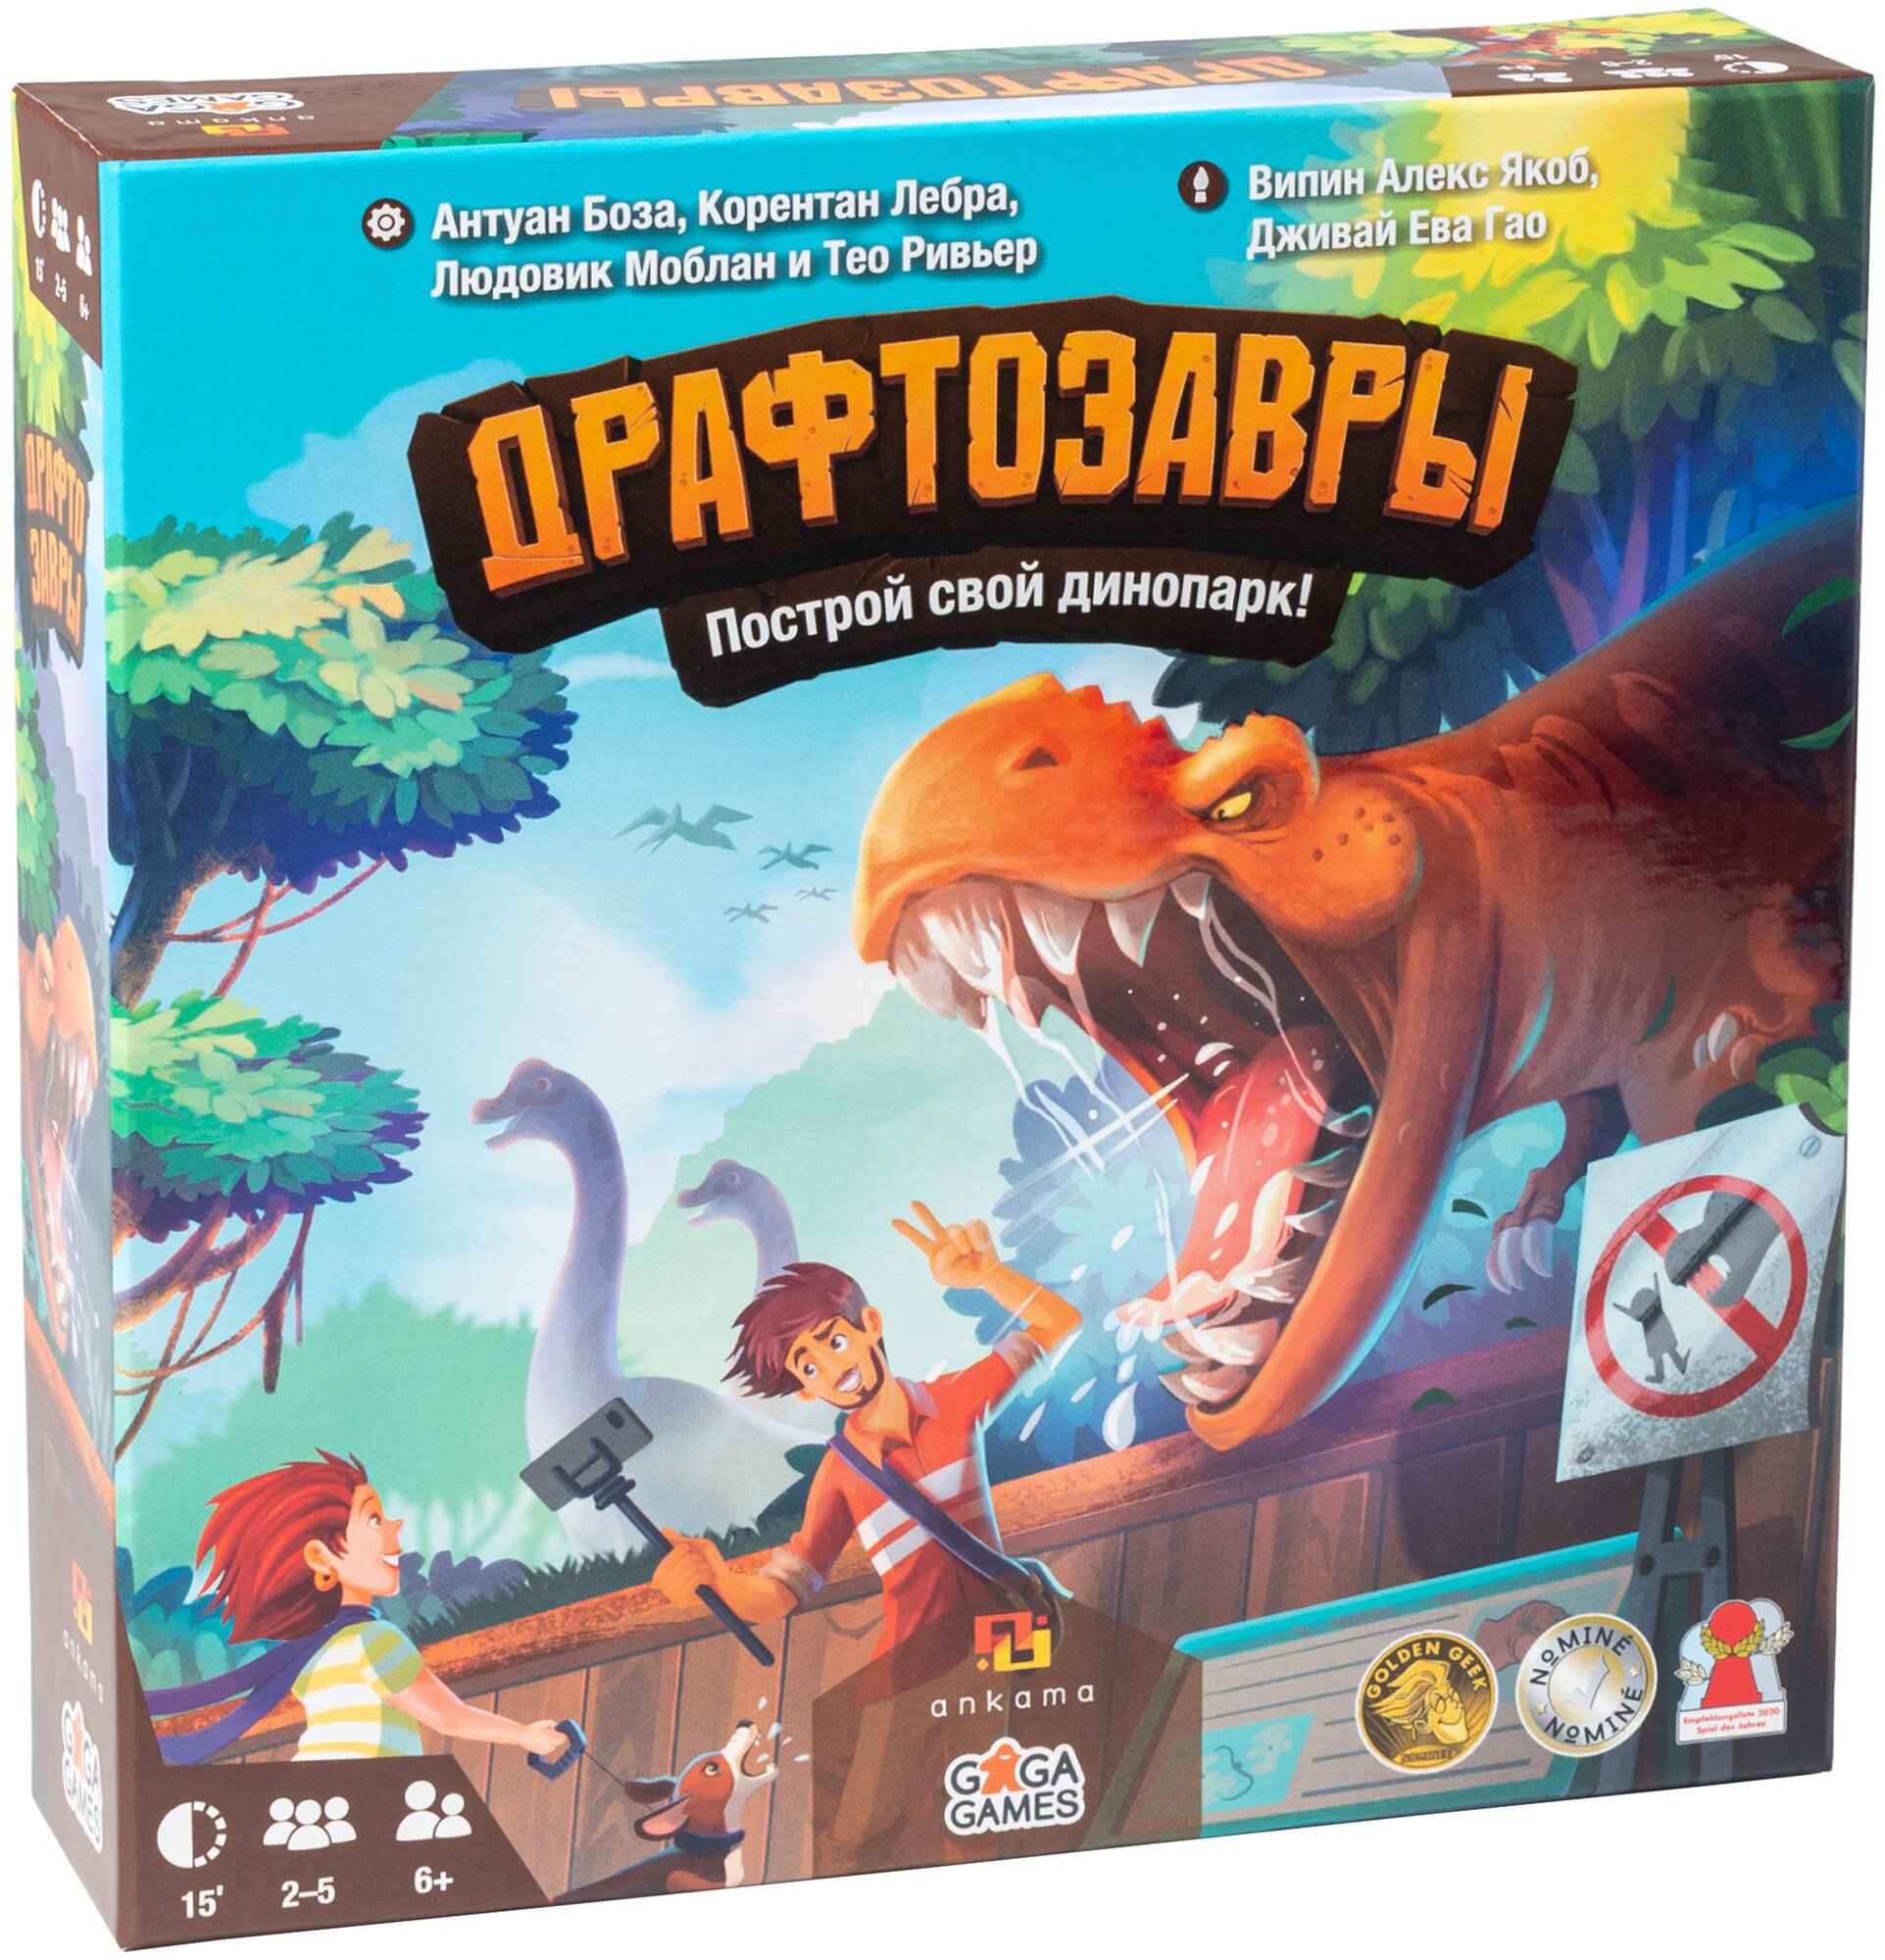 Настольная игра "Драфтозавры" (база) арт.GG202 Gaga Games - фото №2